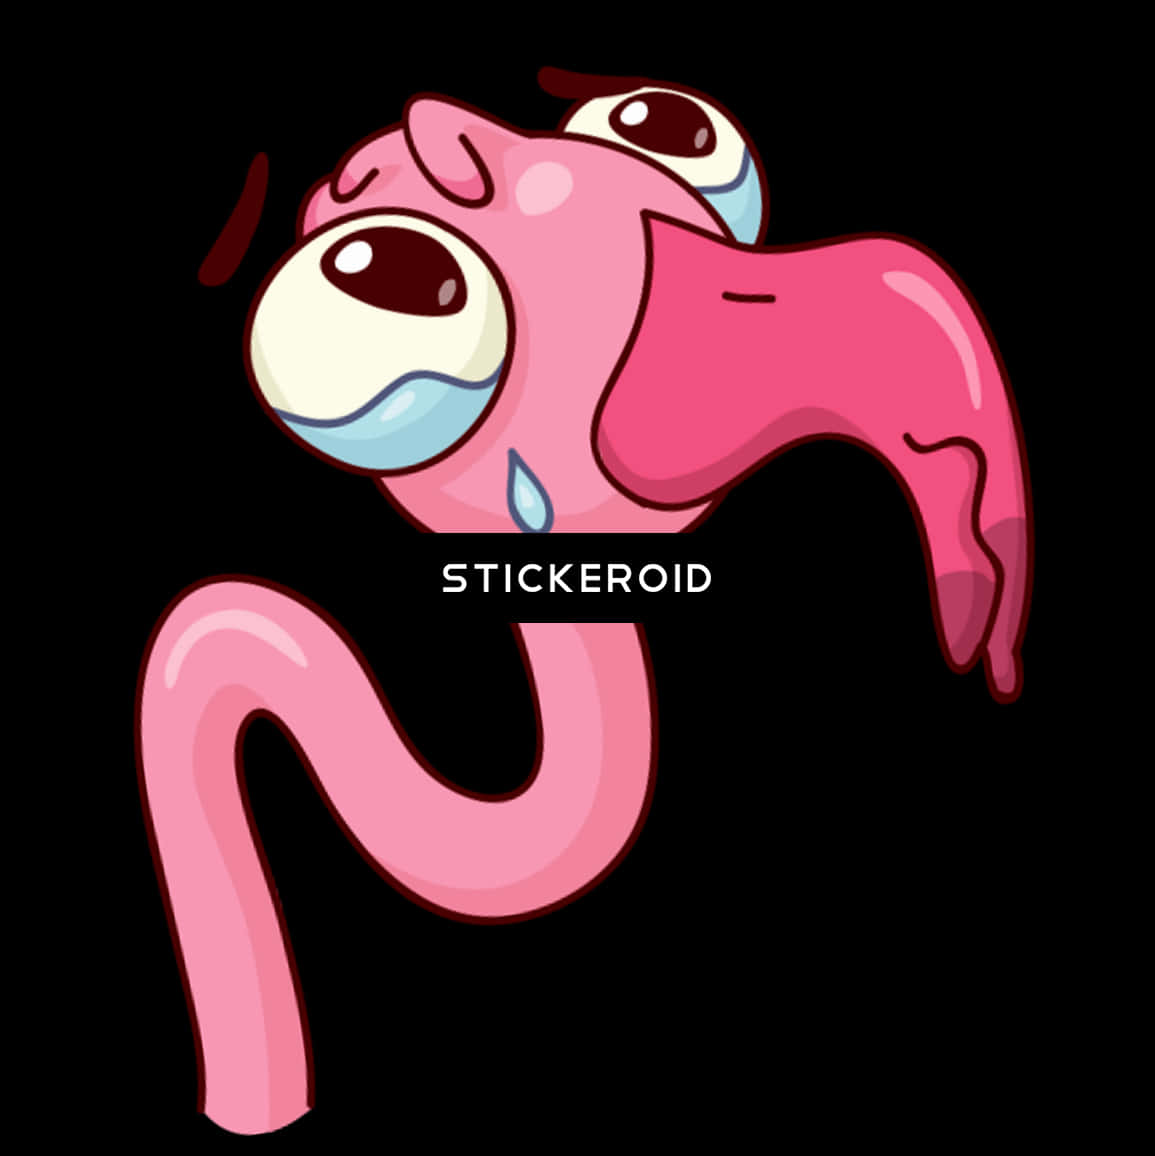 A Cartoon Of A Pink Bird With A Teary Beak